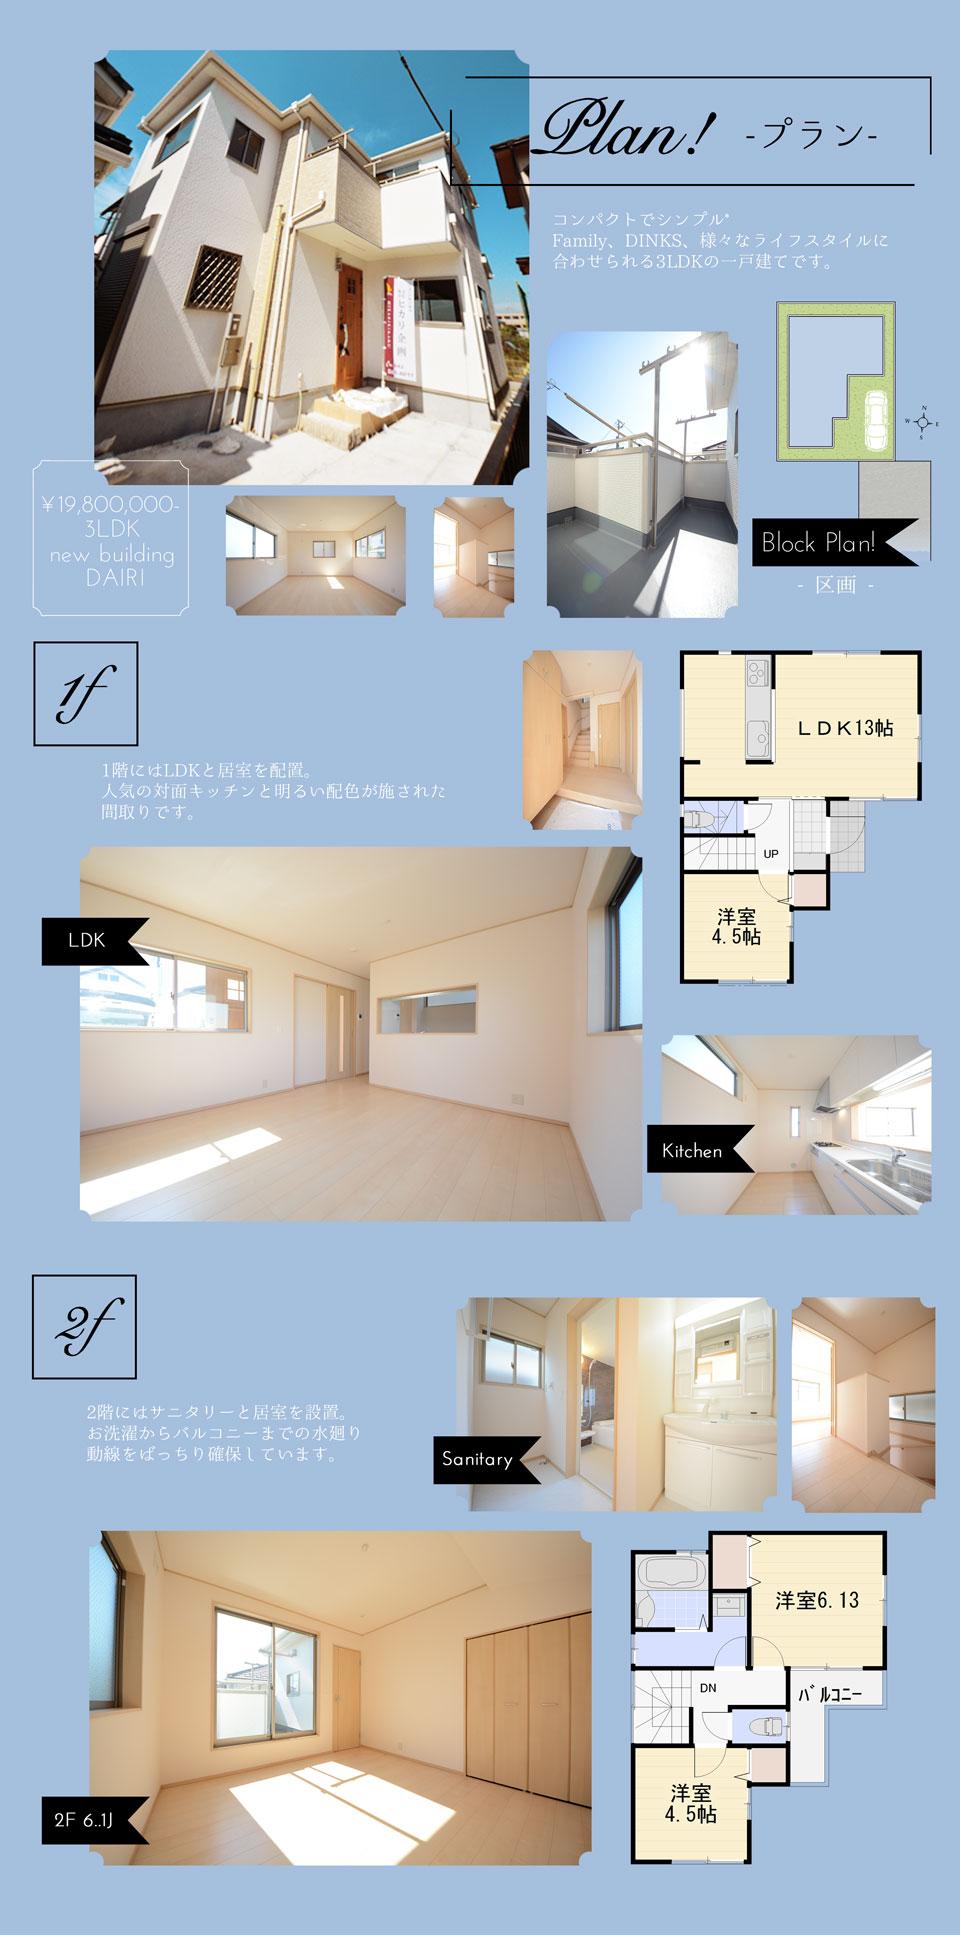 Floor plan. 19,800,000 yen, 3LDK, Land area 74.01 sq m , Building area 69.34 sq m